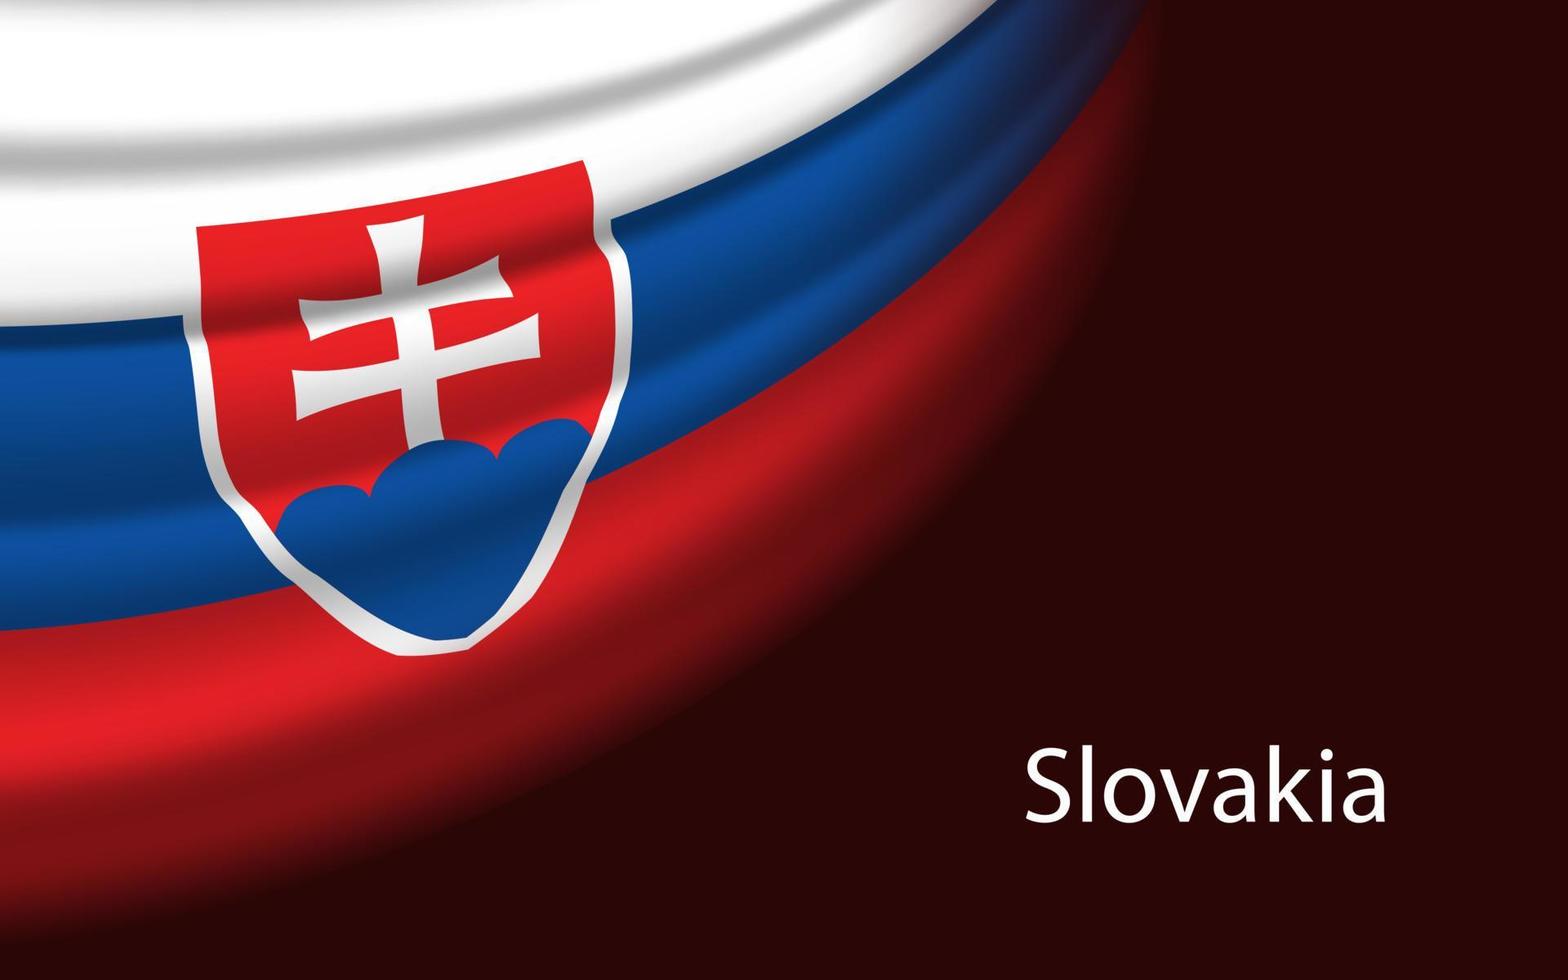 Vinka flagga av slovakia på mörk bakgrund. baner eller band Vecto vektor